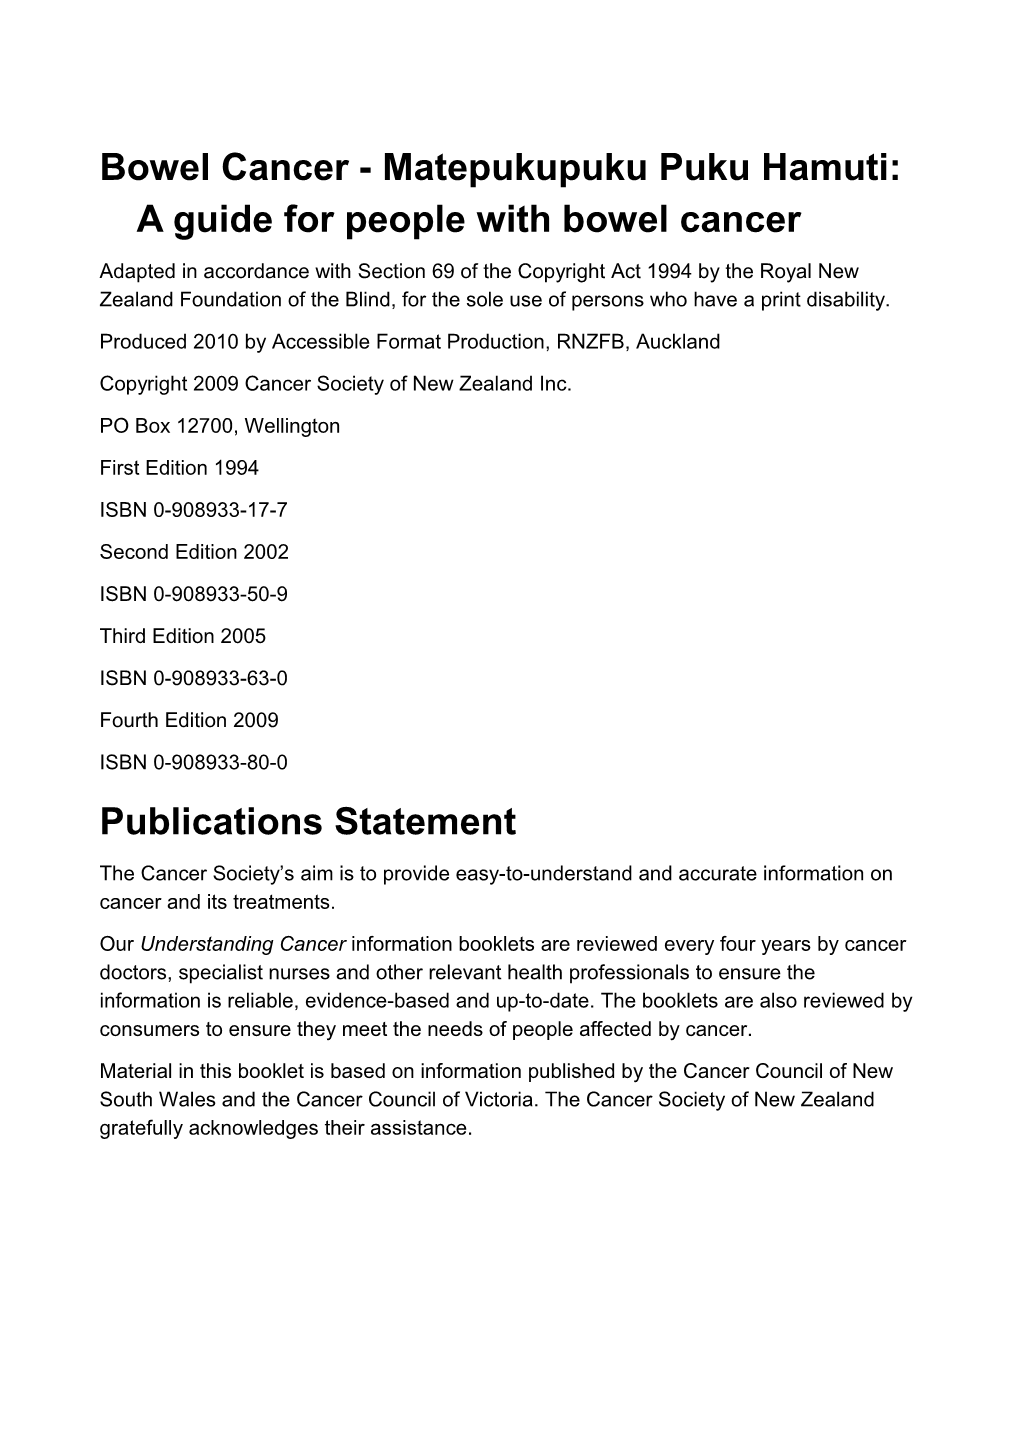 Bowel Cancer - Matepukupuku Puku Hamuti: a Guide for People with Bowel Cancer